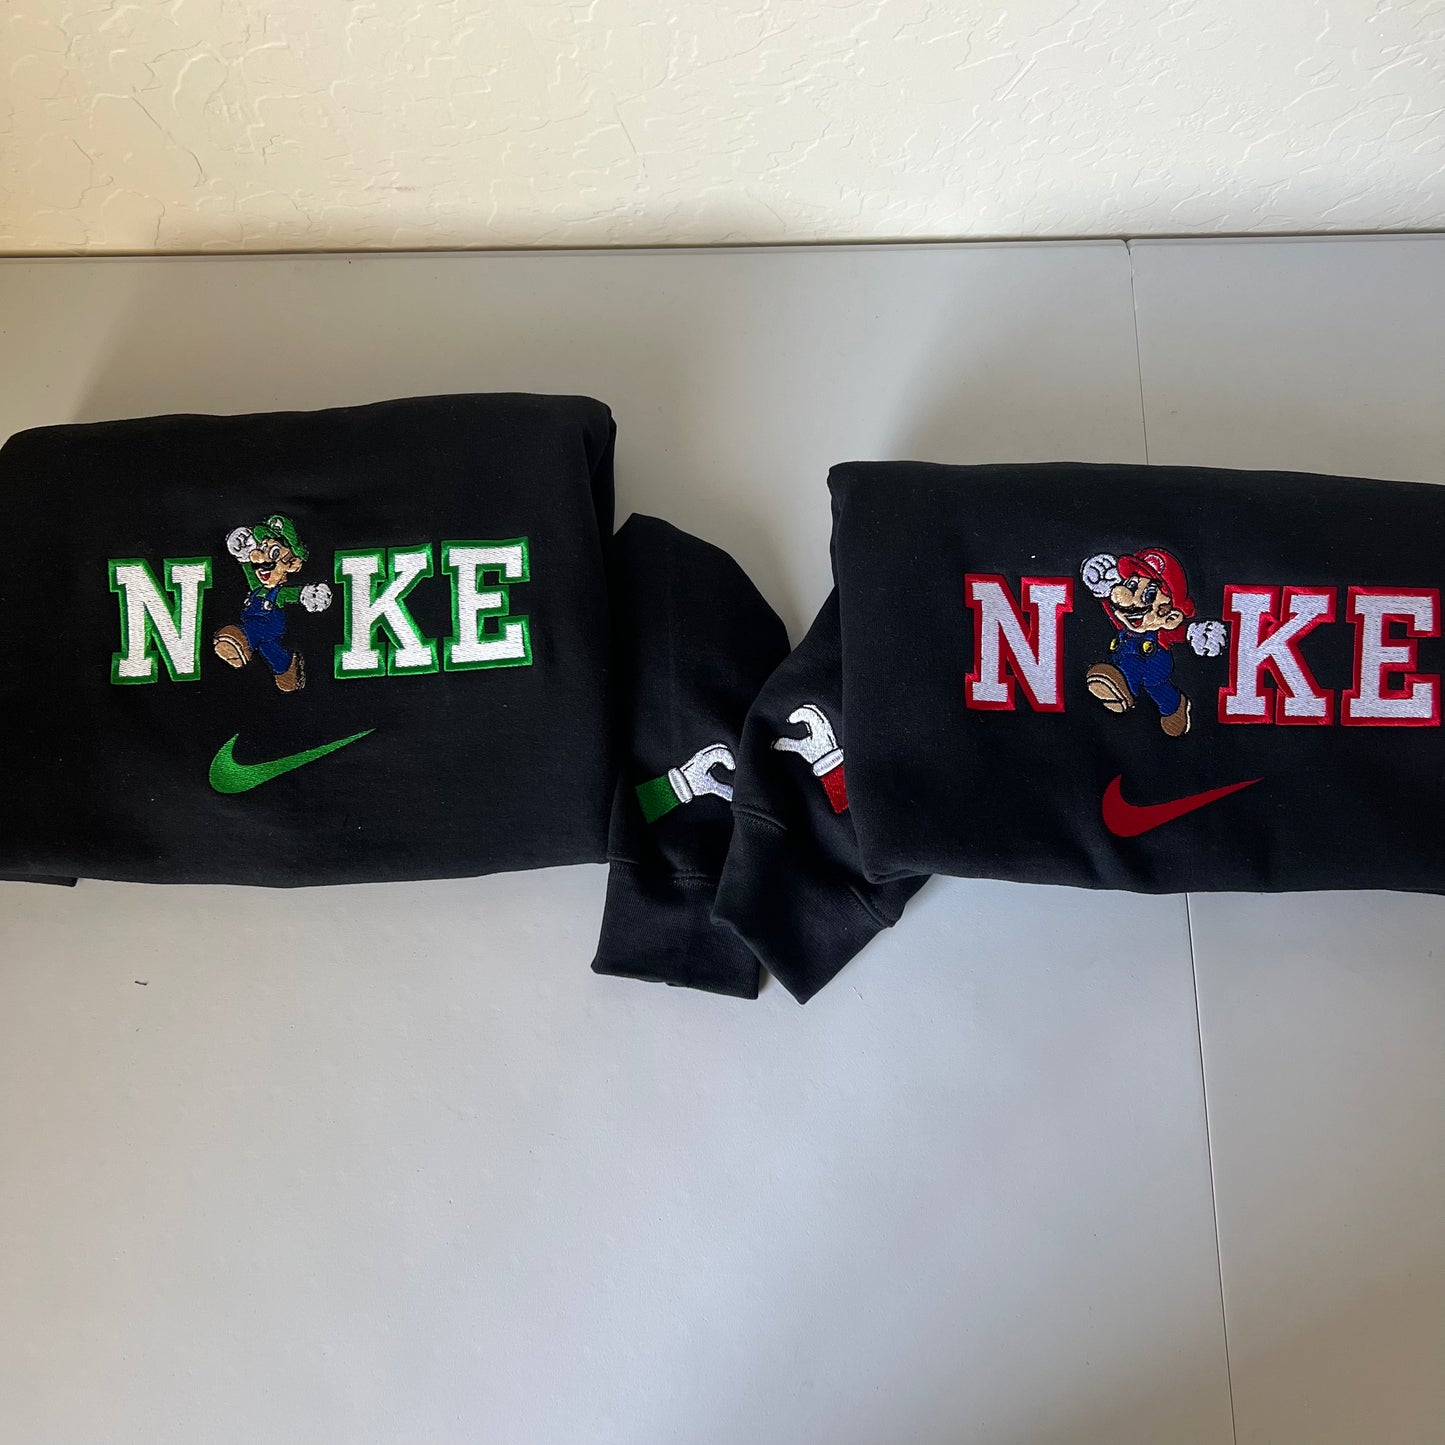 Luigi y Mario inspired embroidered sweaters, matching sweatshirts, couple hoodies